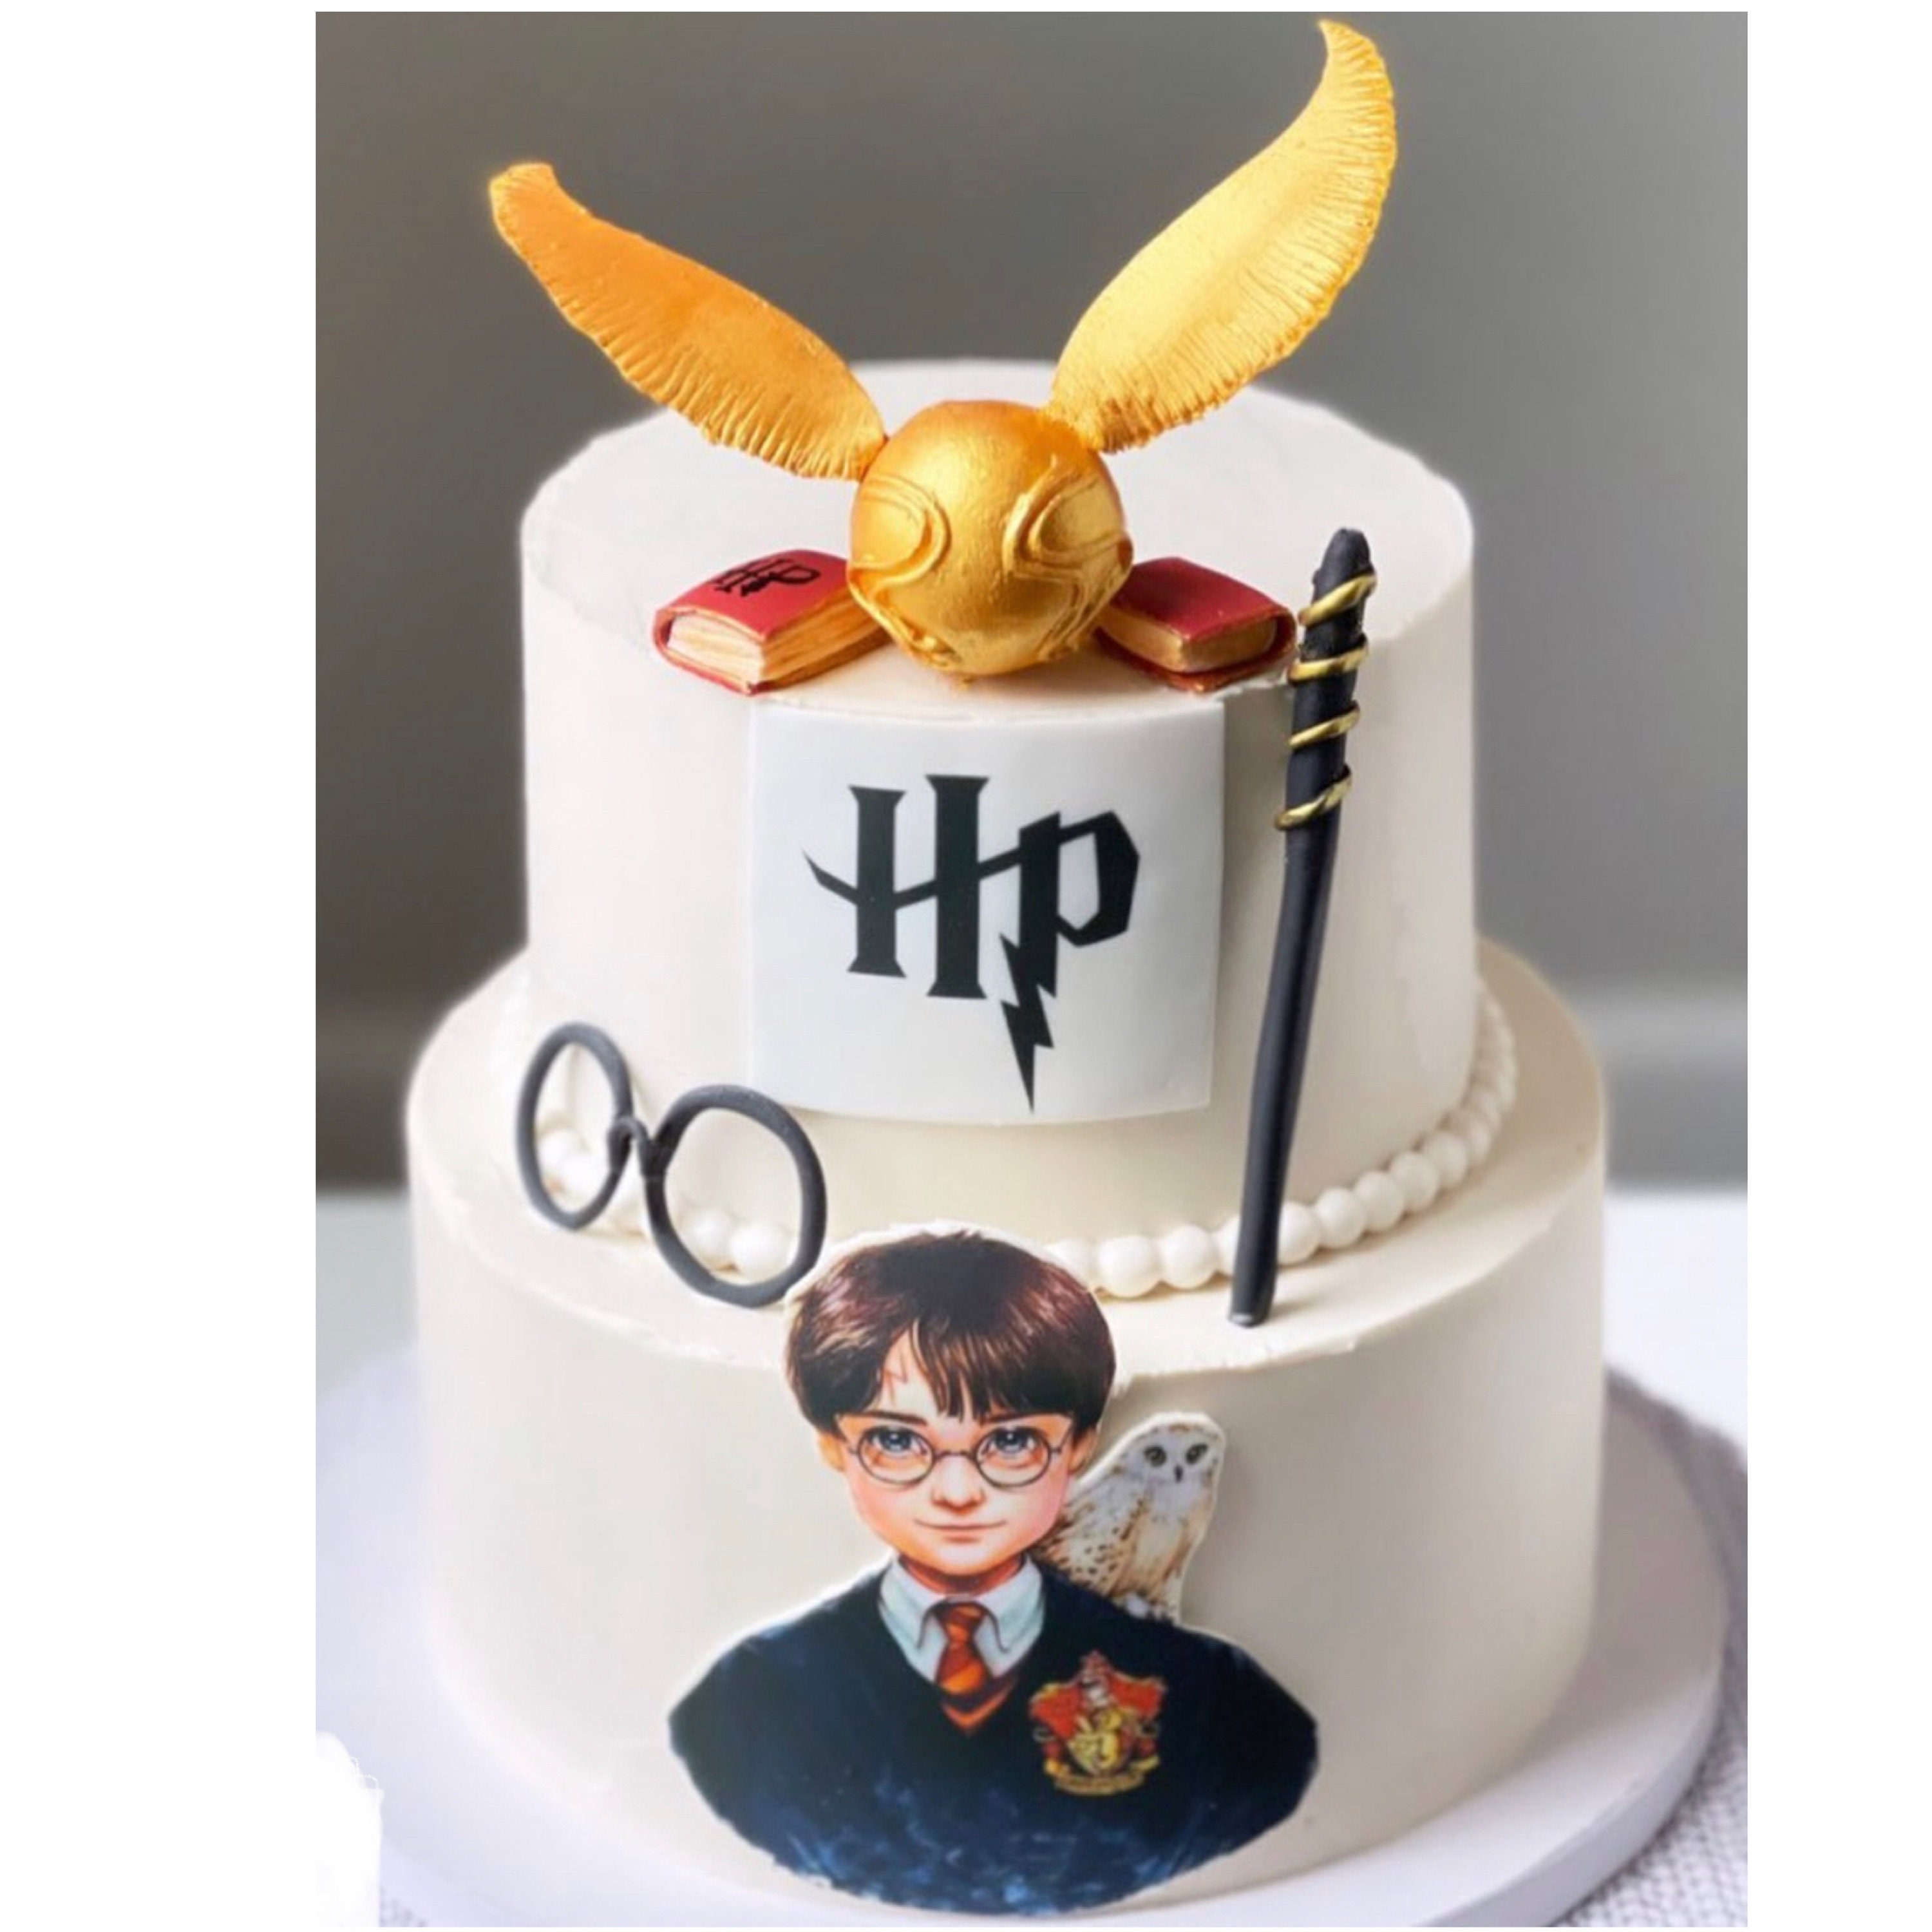 Fondant Cake topper Harry Potter